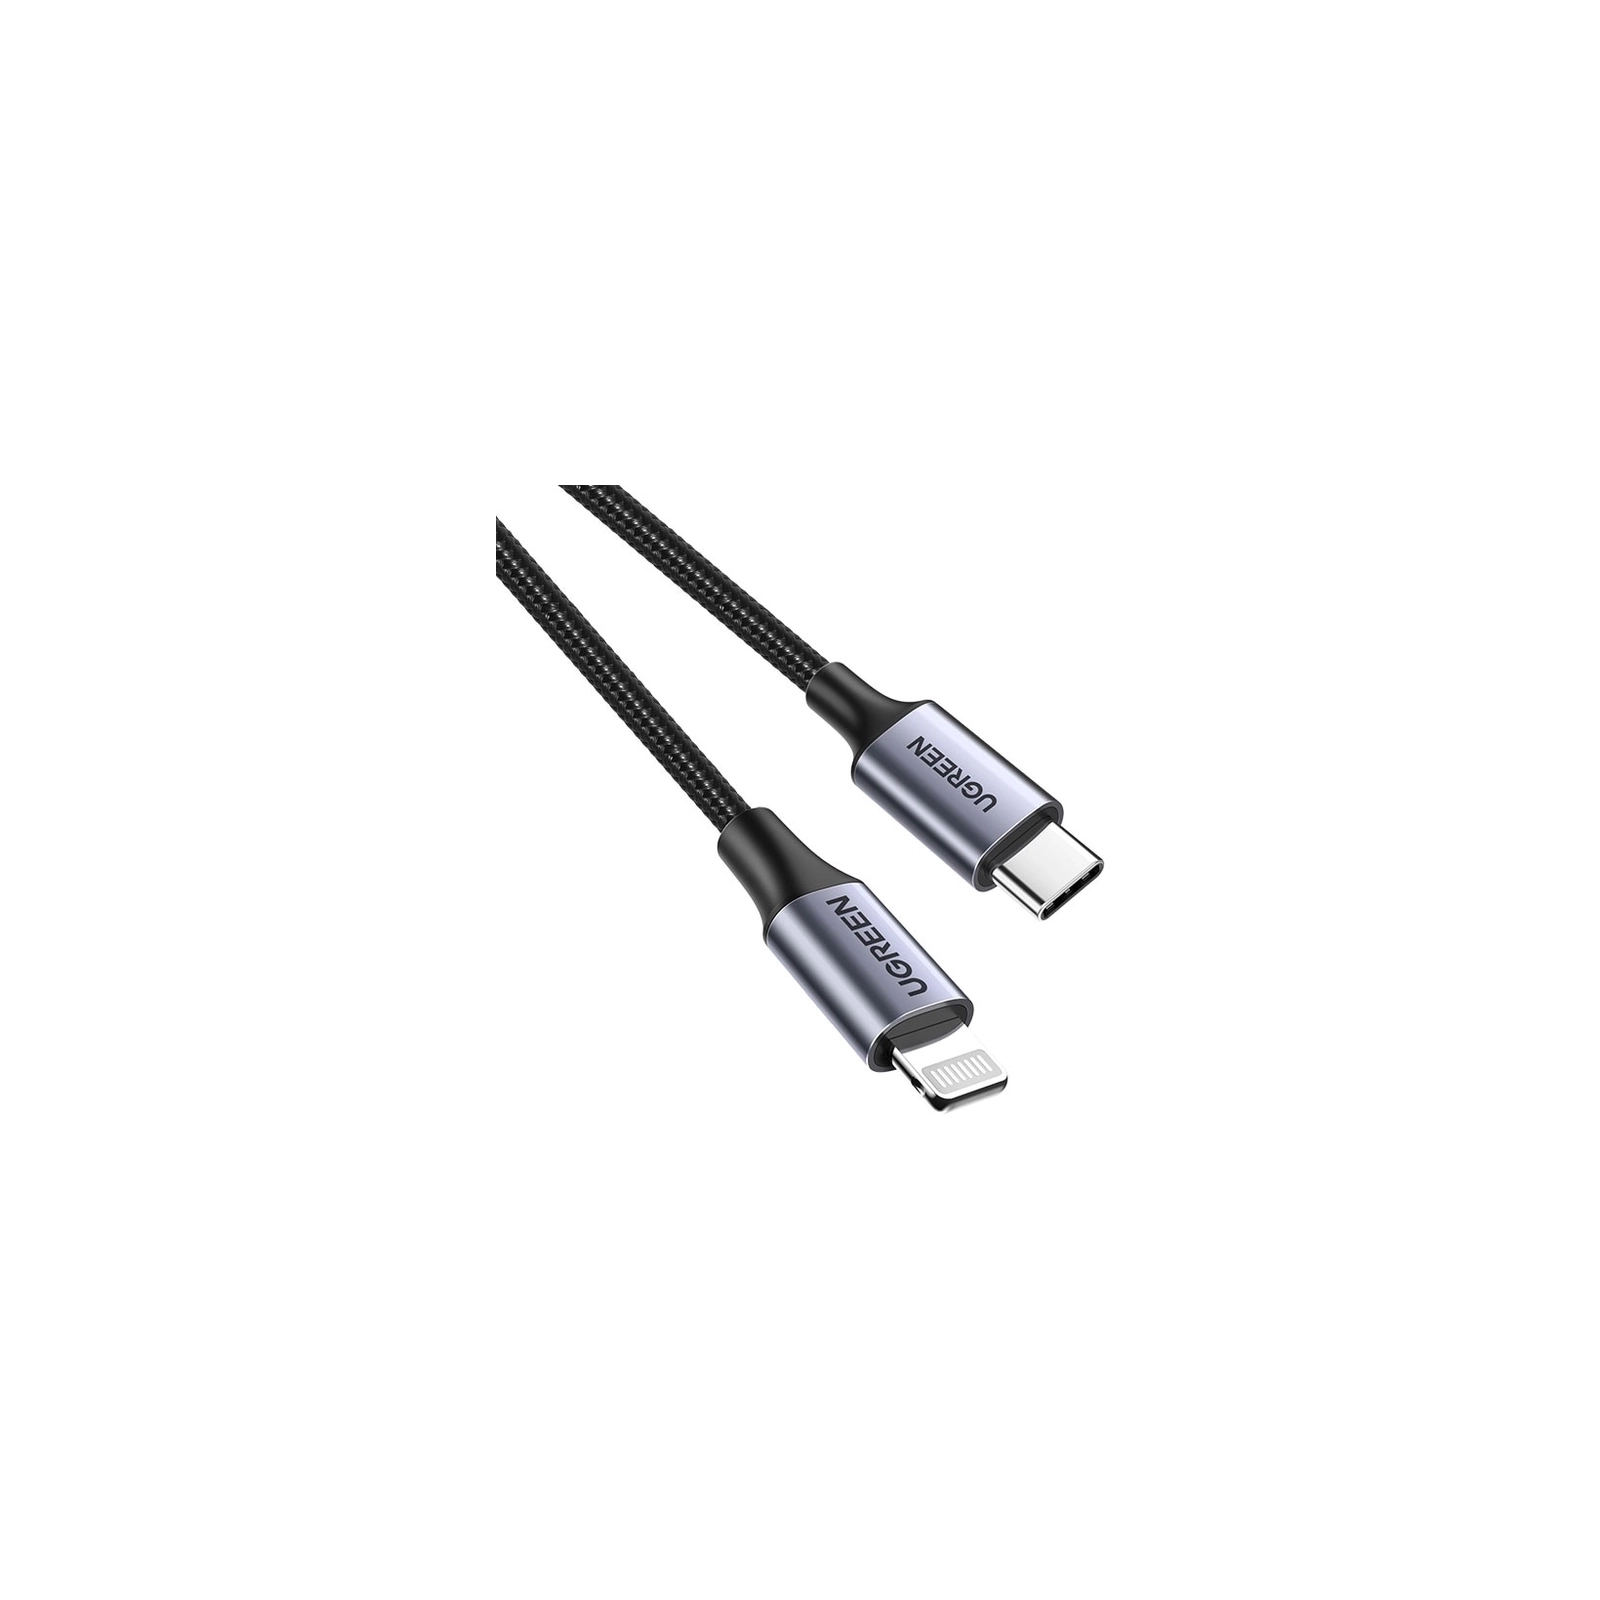 Дата кабель USB-C to Lightning 1.5m US304 MFI White Ugreen (US304/70524) зображення 2